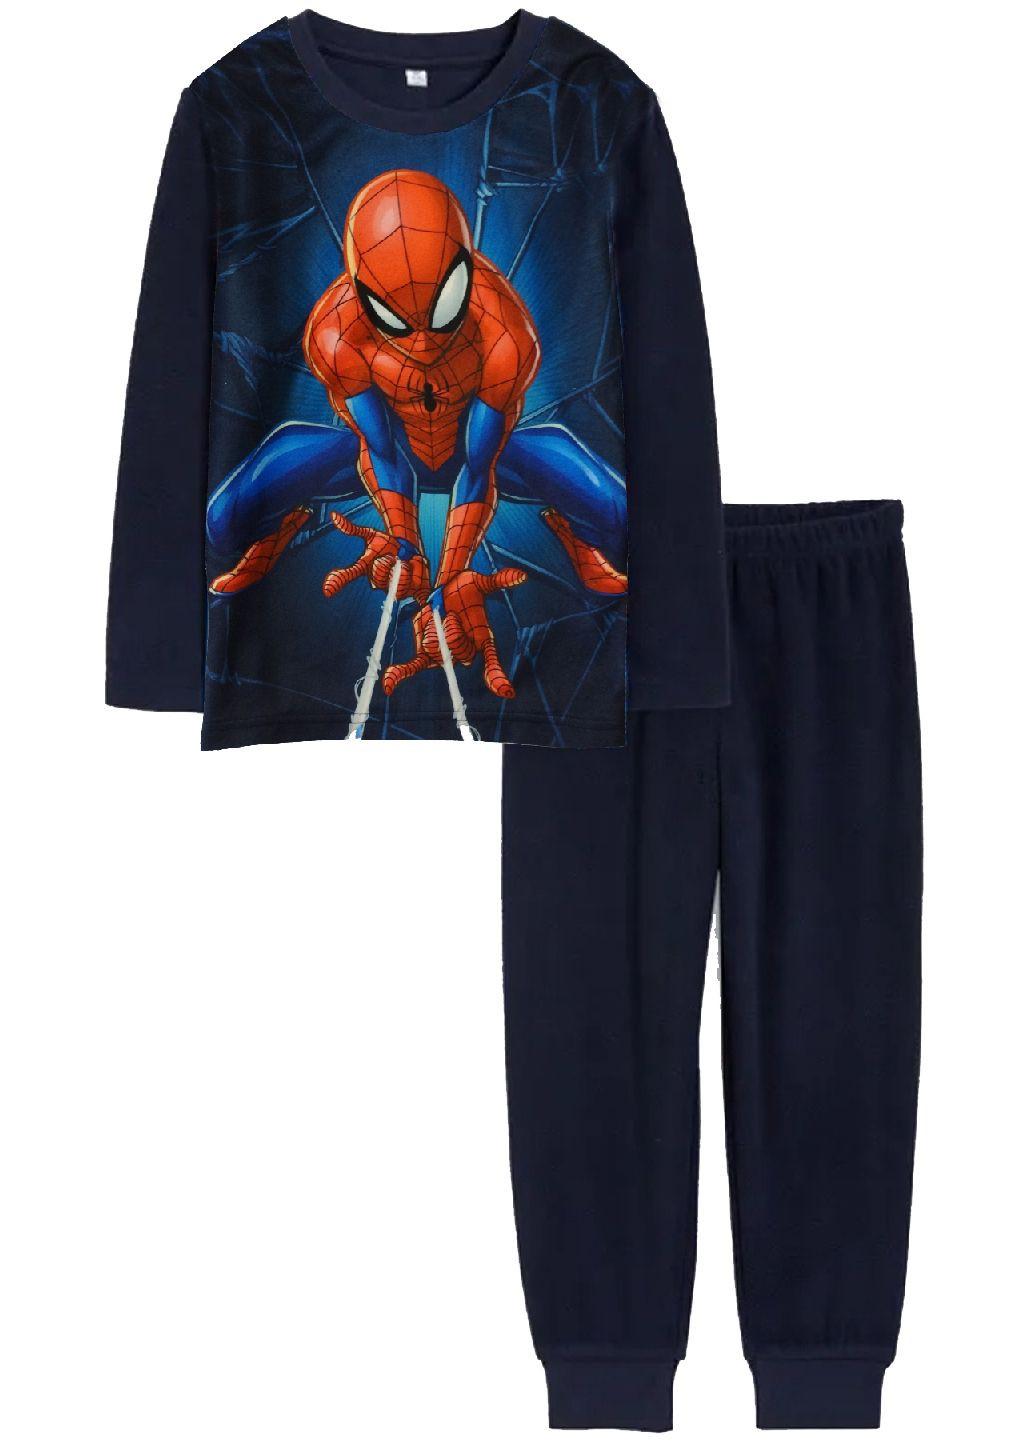 Темно-синяя зимняя флисовая пижама (свитшот, брюки) свитшот + брюки C&A